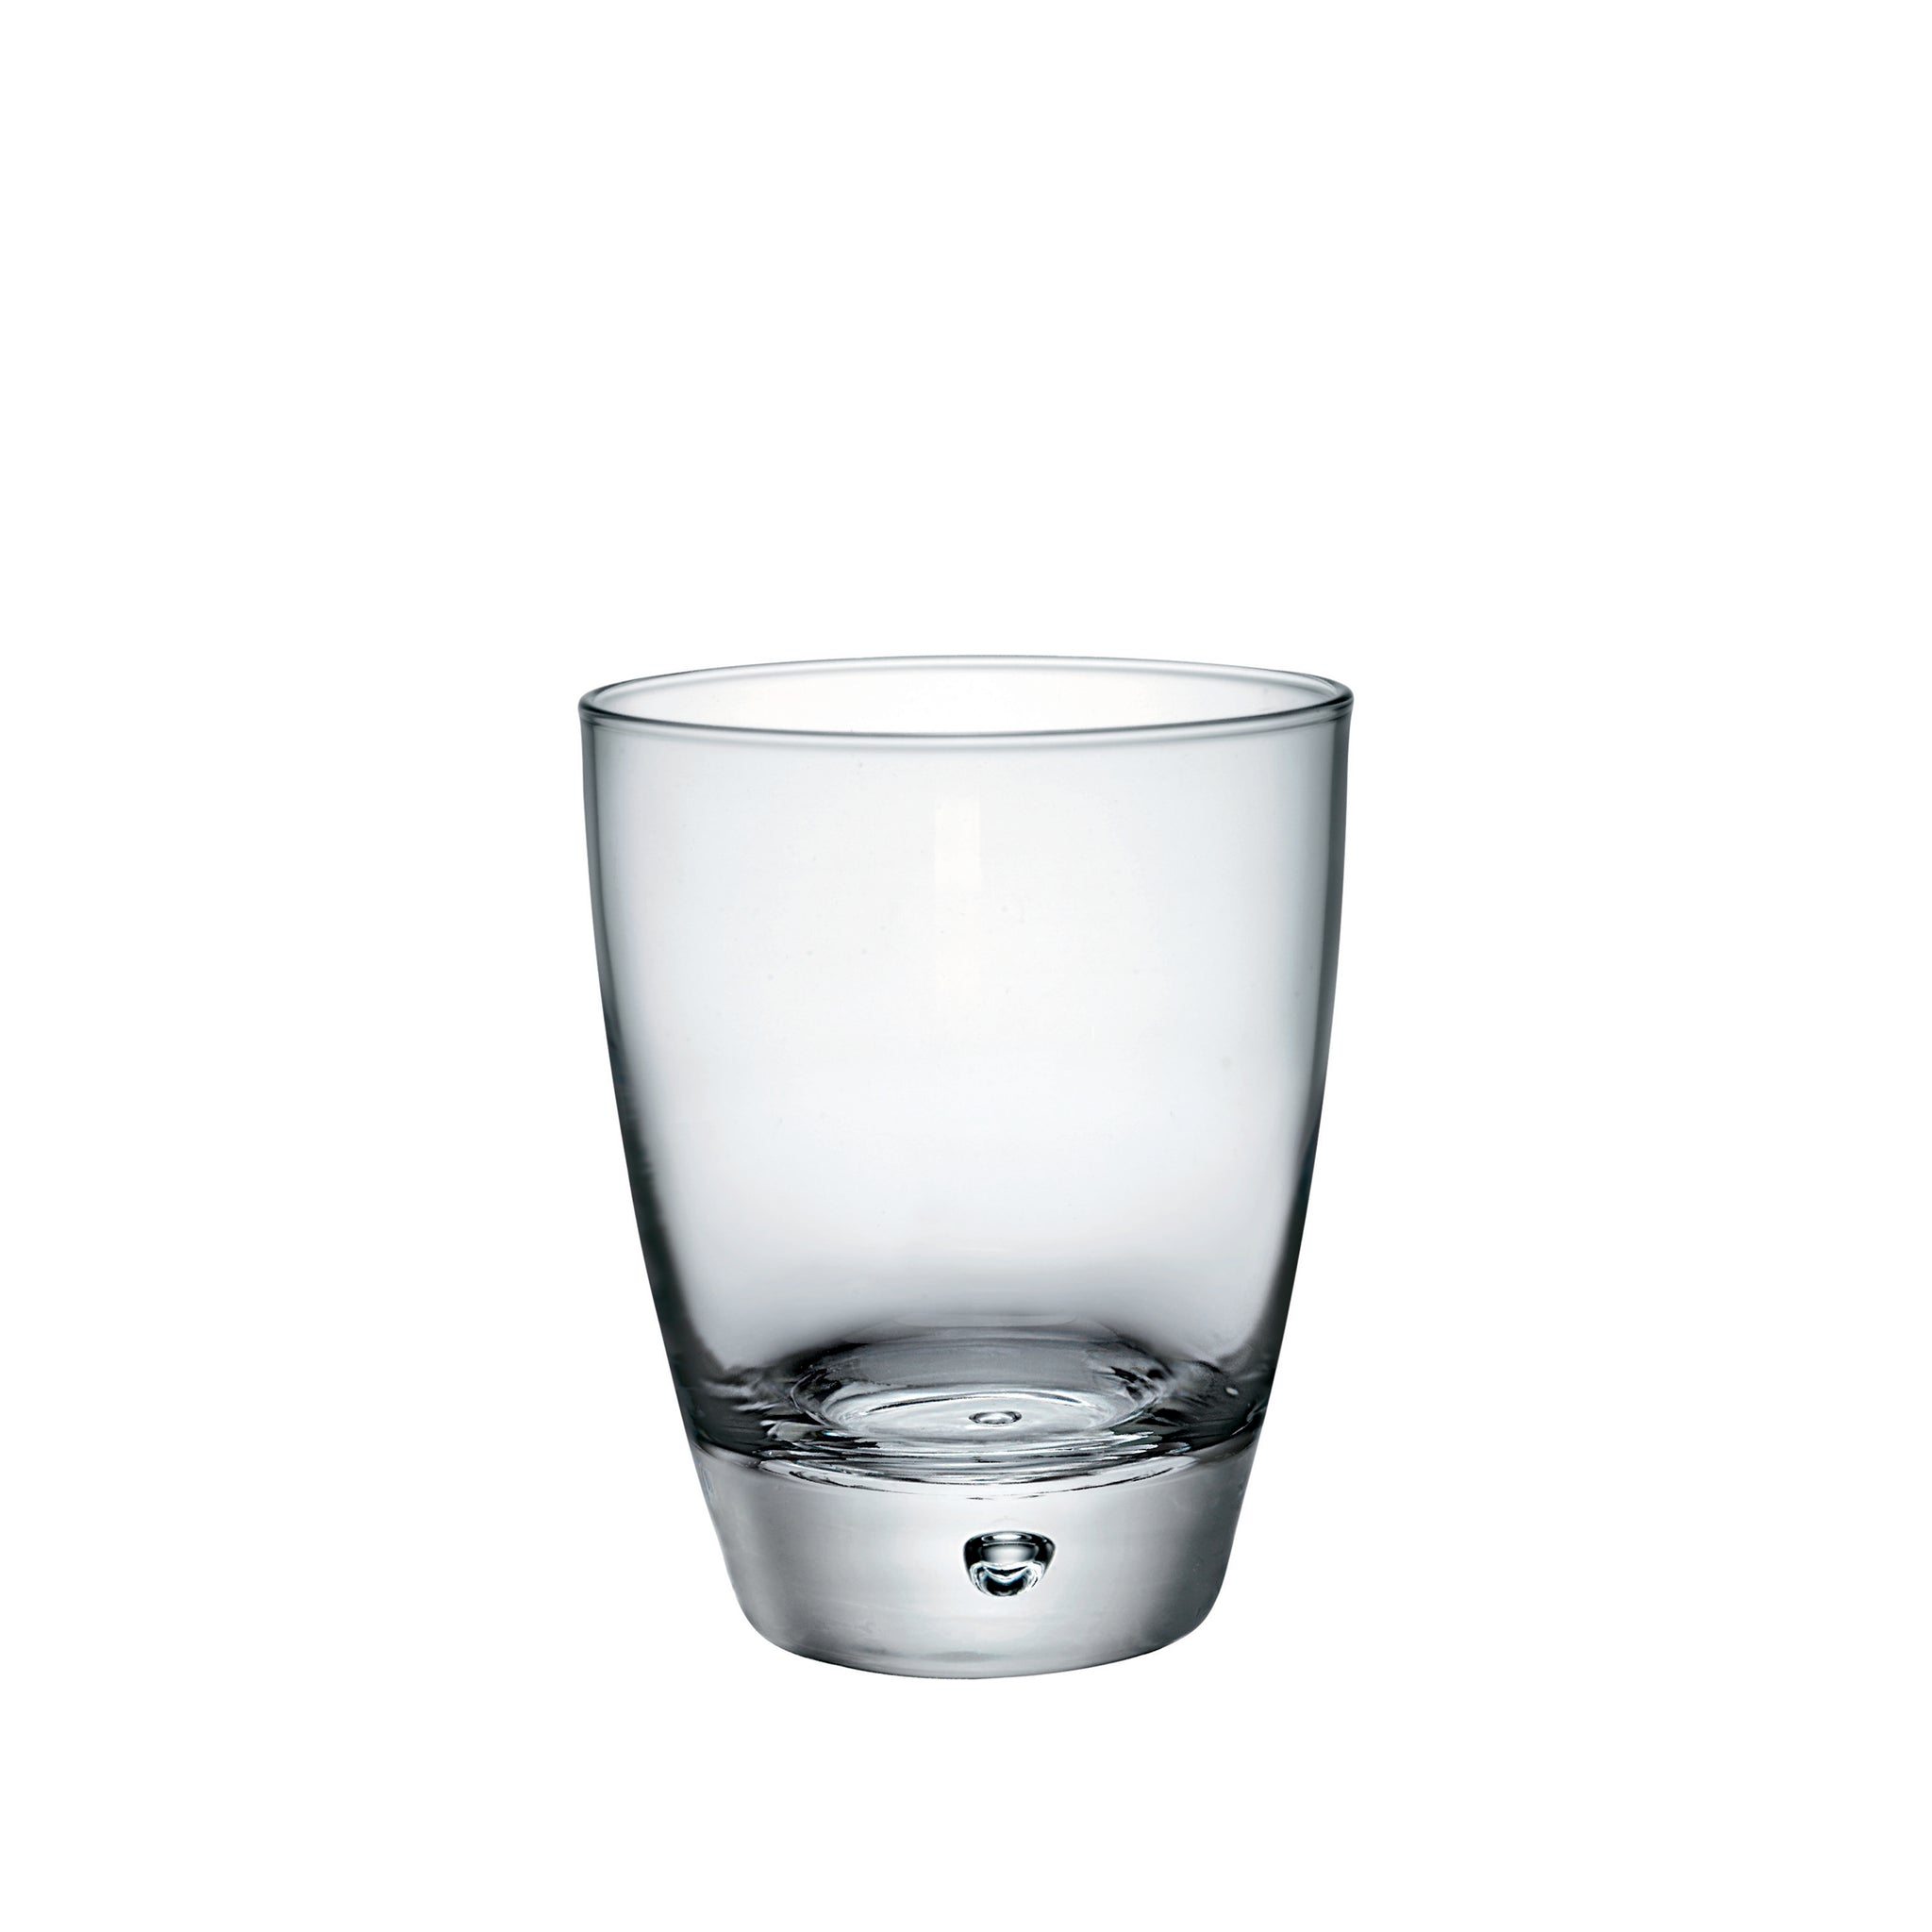 Bormioli Rocco Luna 11.75 oz. DOF Drinking Glasses (Set of 4)